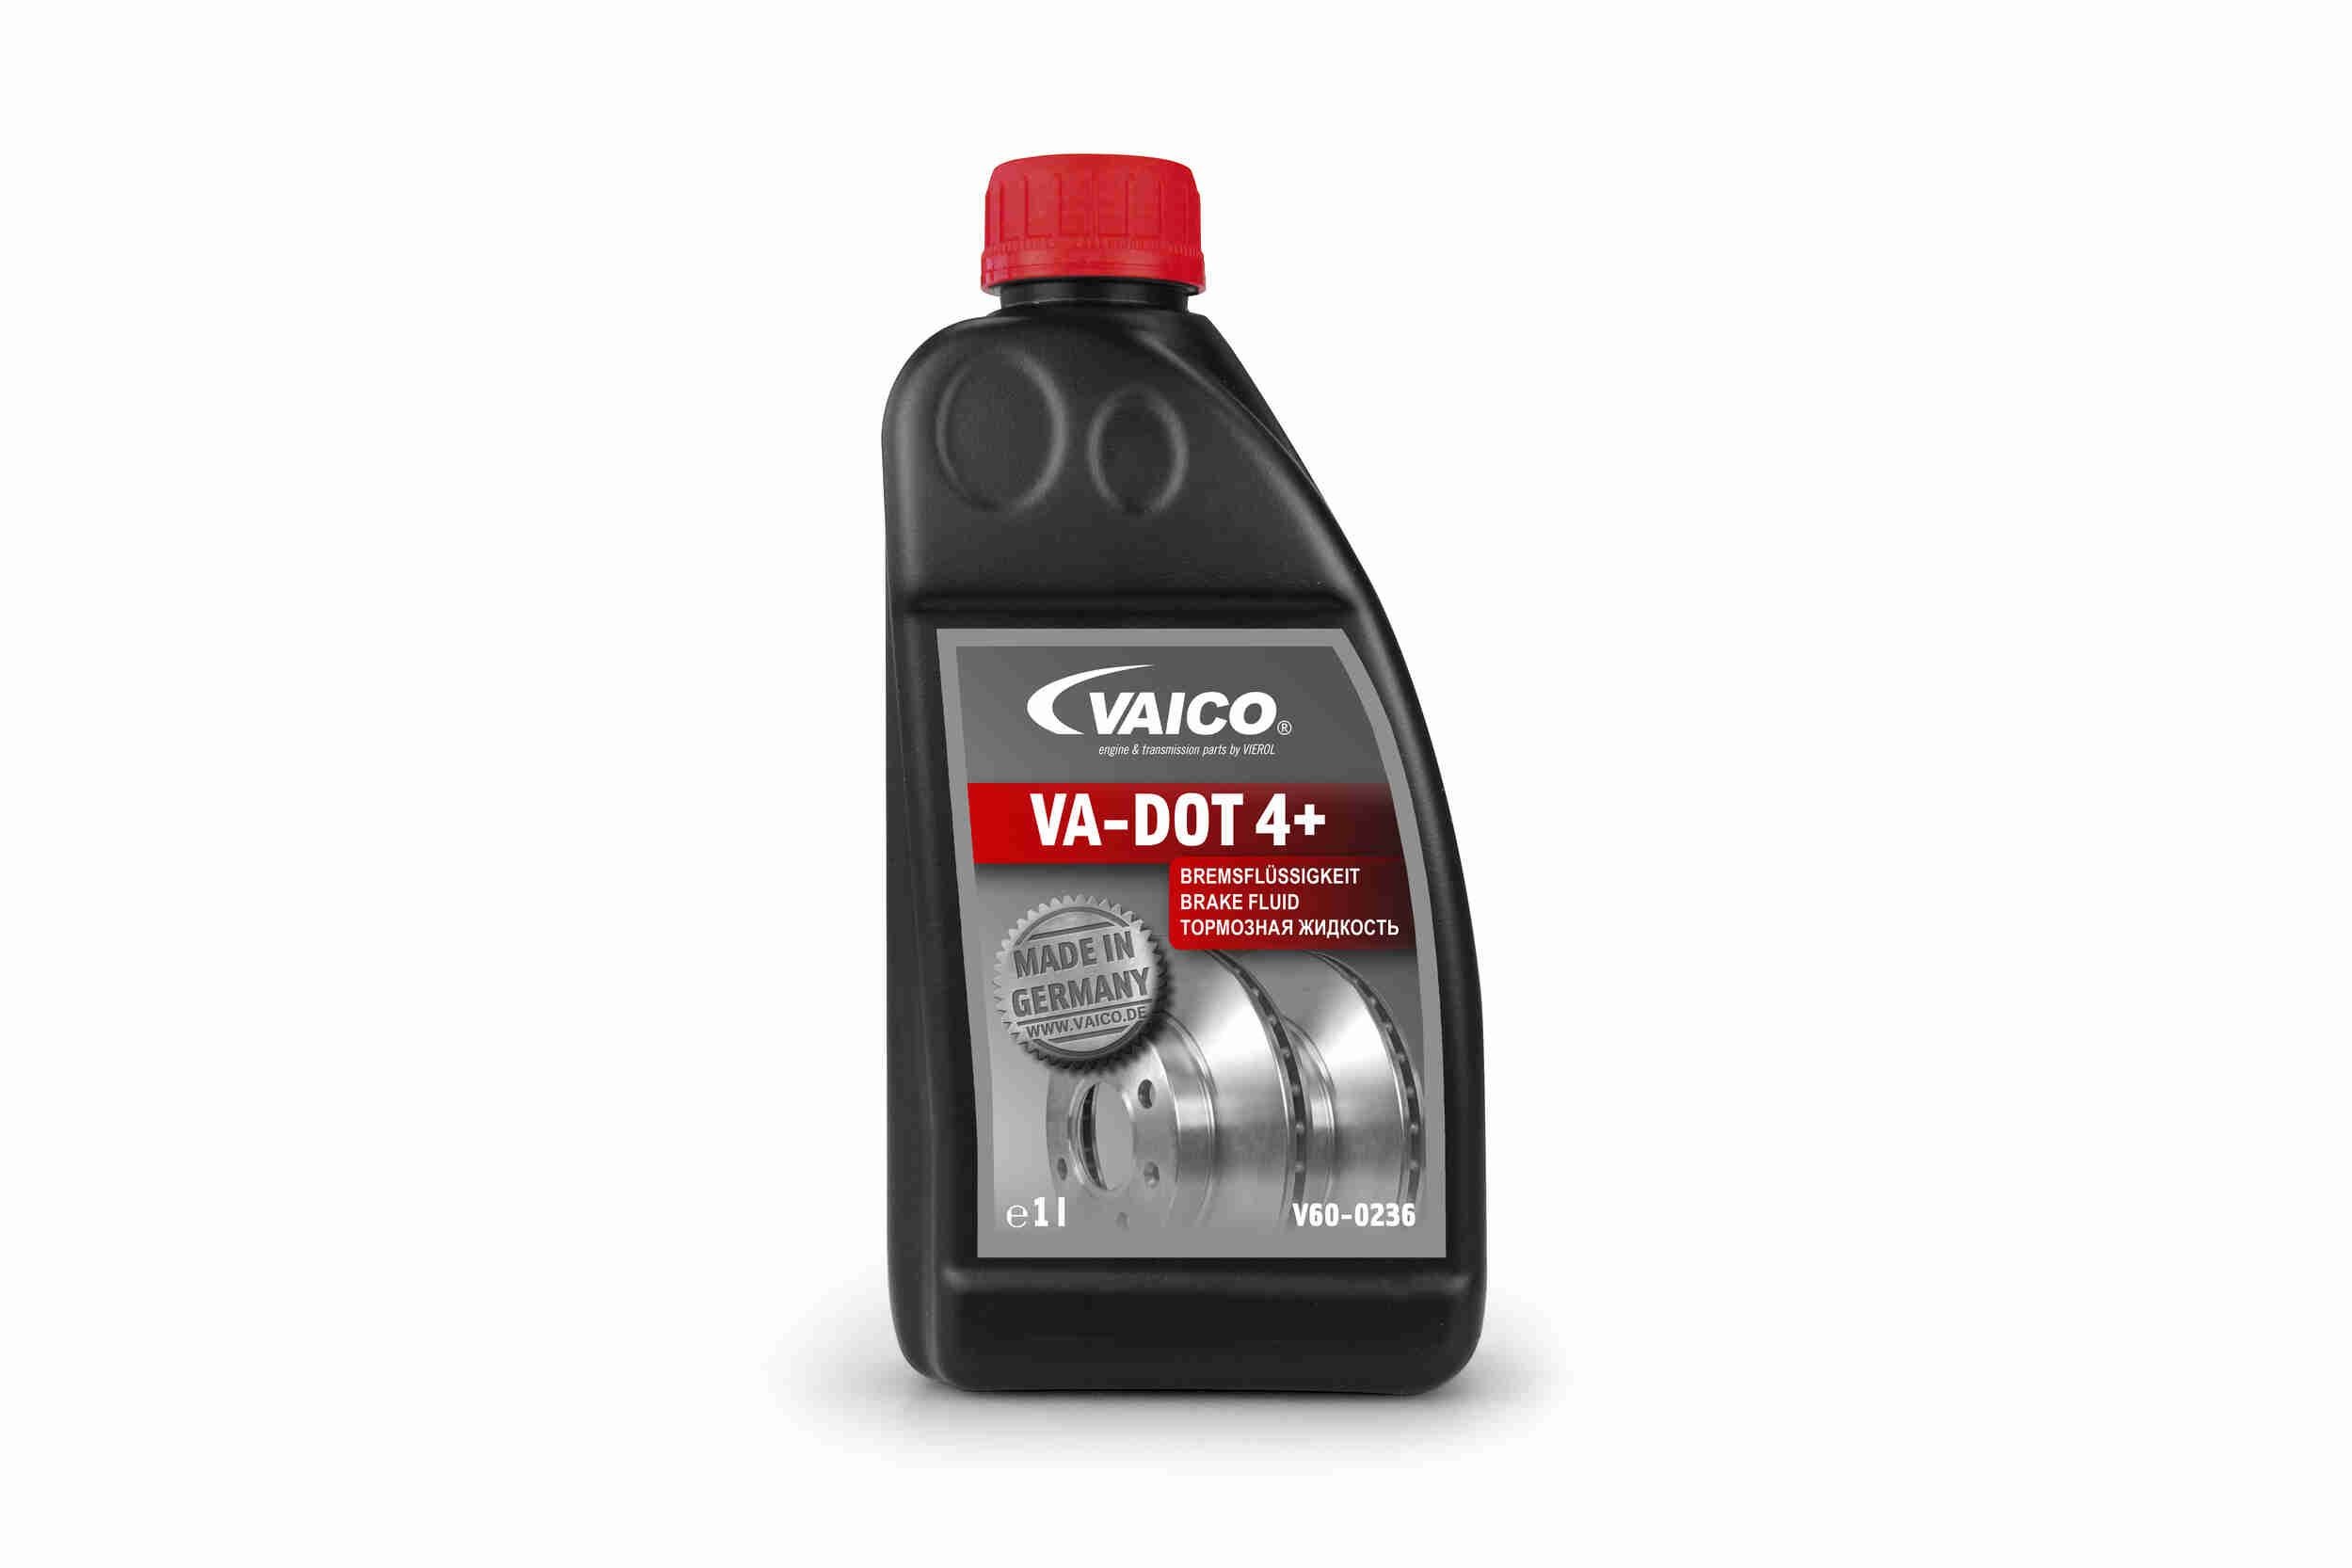 VAICO FMVSS 116 DOT 4 Brake Fluid 1l, Q+, original equipment manufacturer quality MADE IN GERMANY